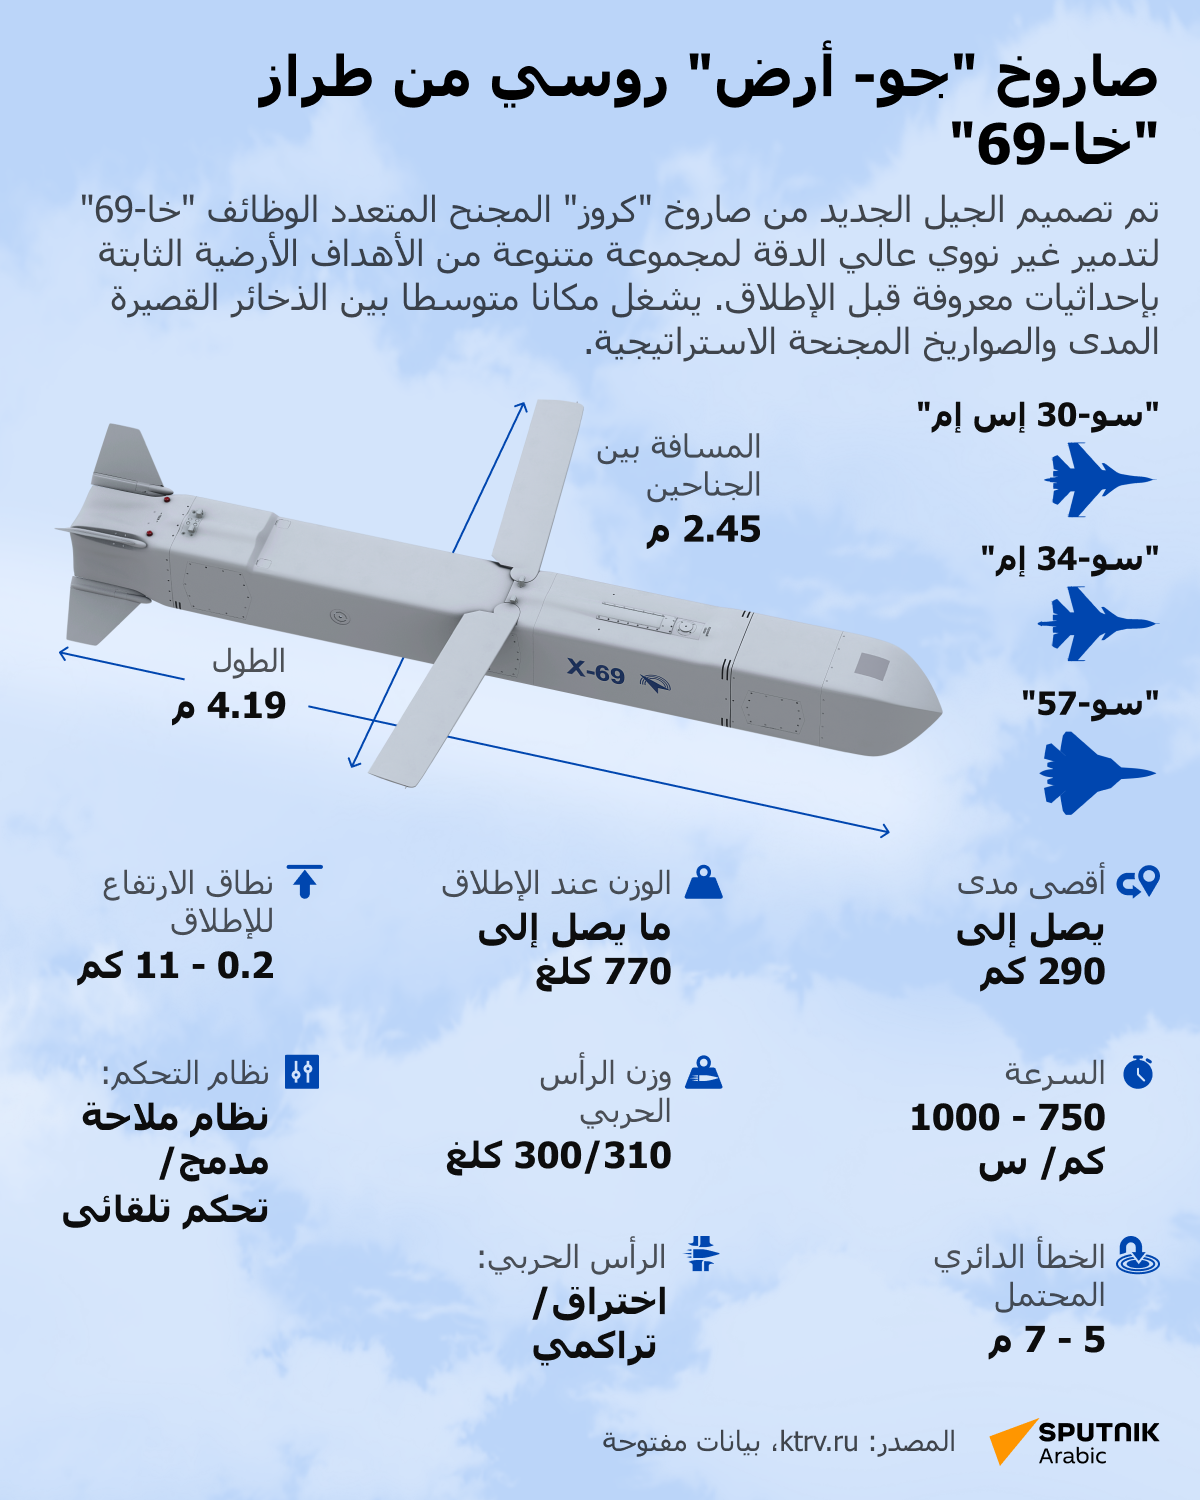 صاروخ جو- أرض روسي من طراز خا-69  - سبوتنيك عربي